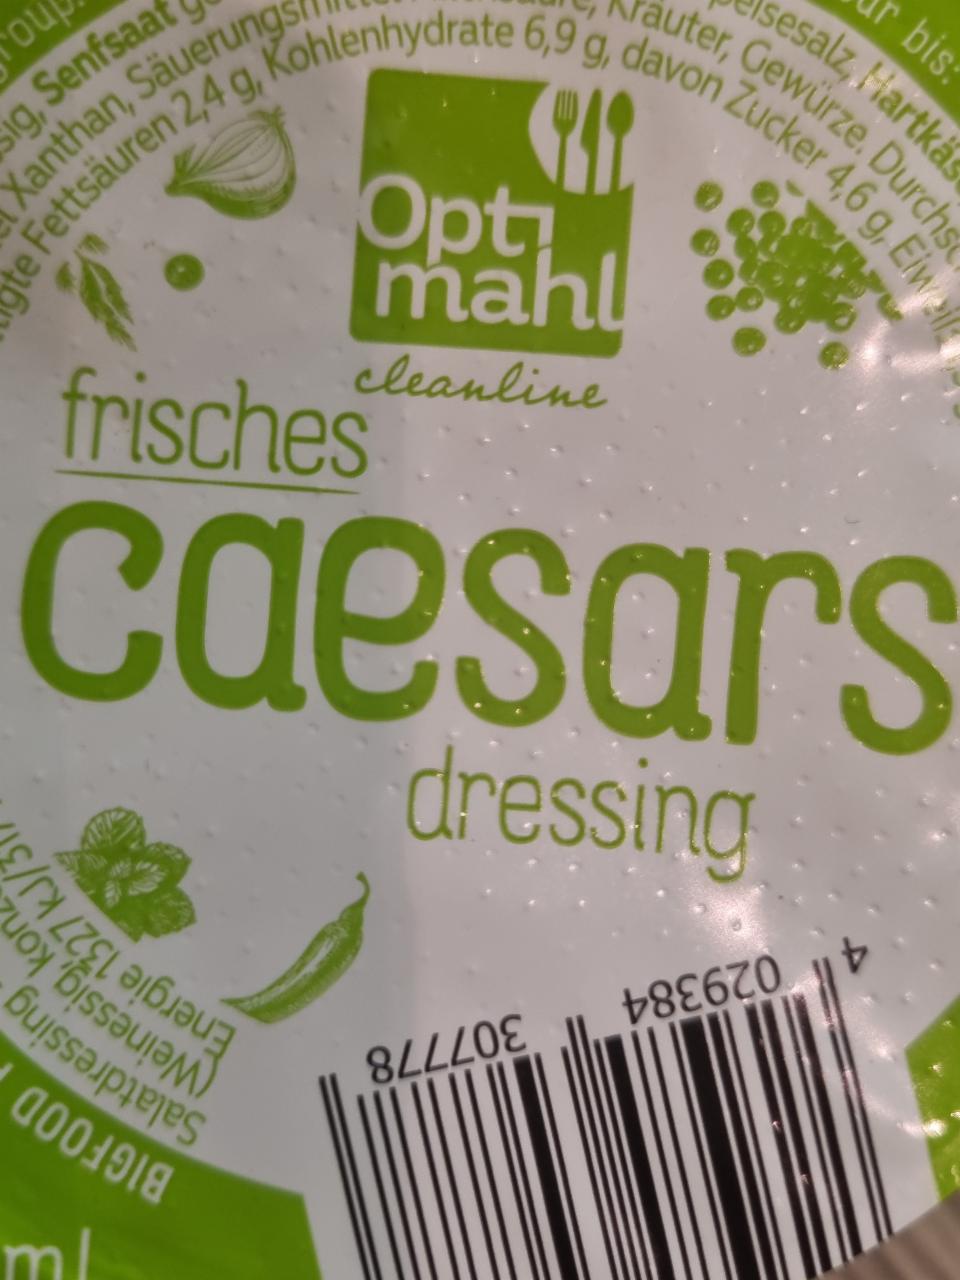 Fotografie - Frisches Caesars dressing Optimahl cleanline